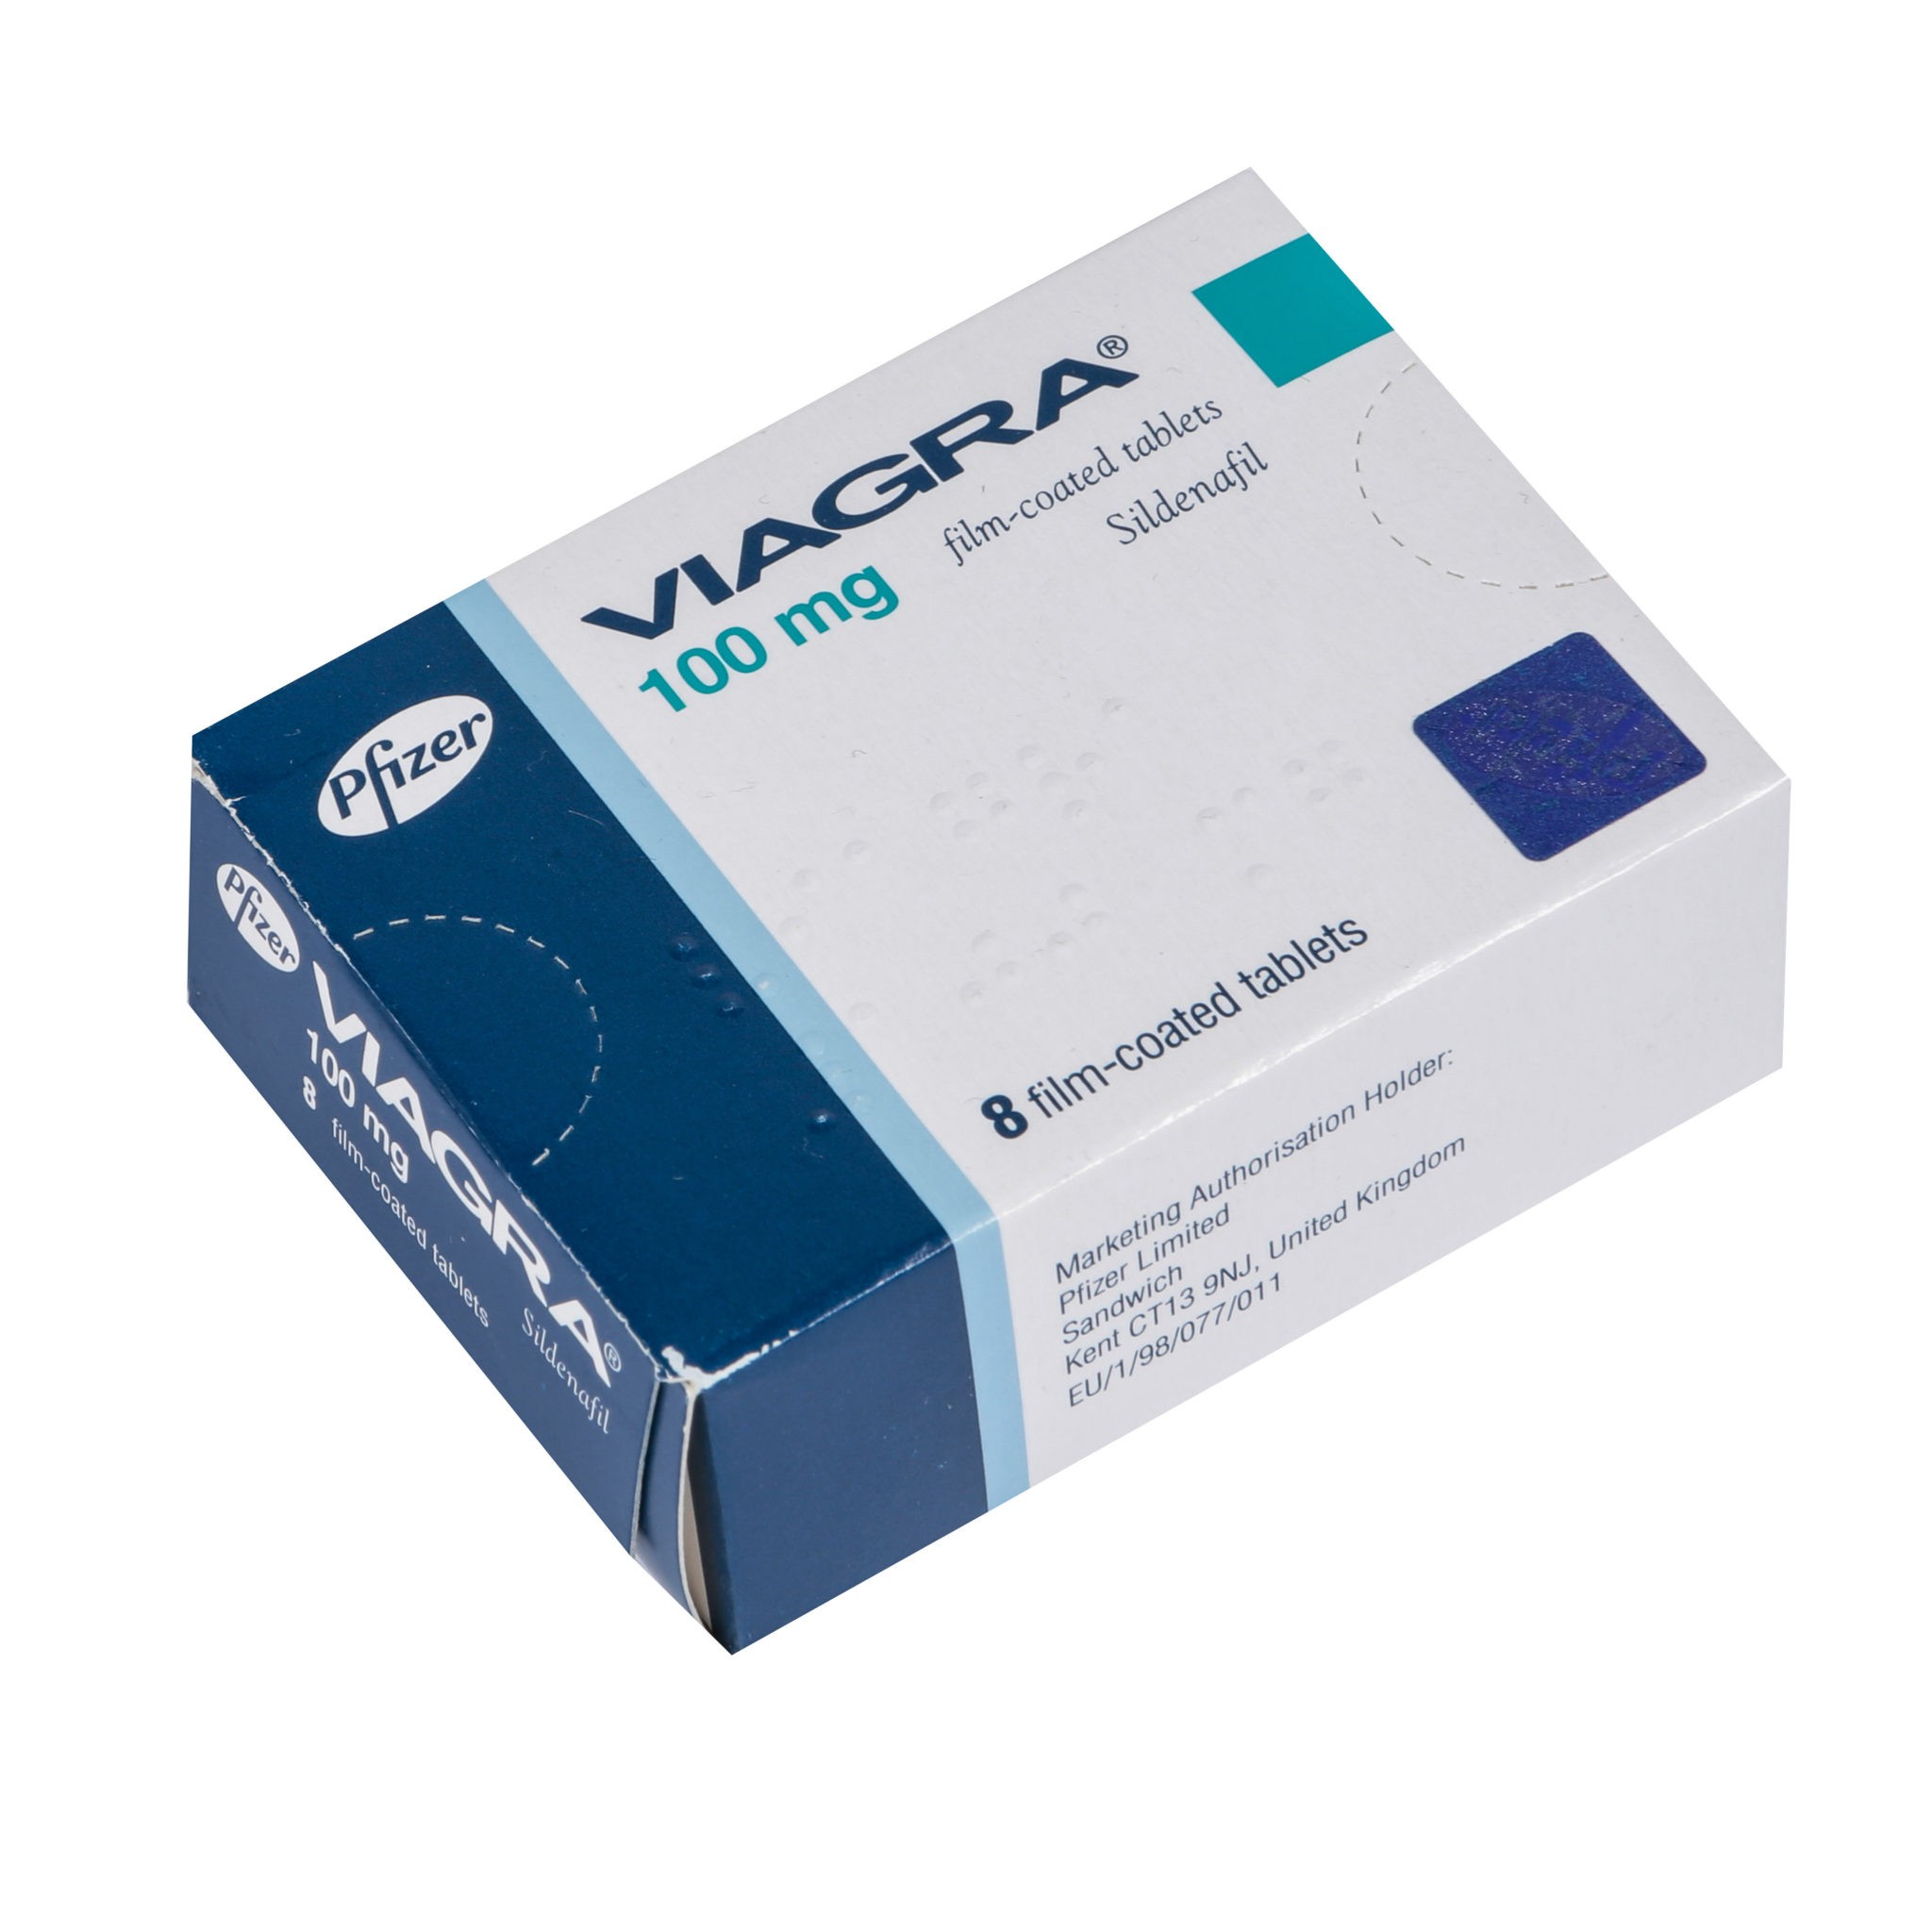 Viagra 100mg Tablets (28 Tablets)